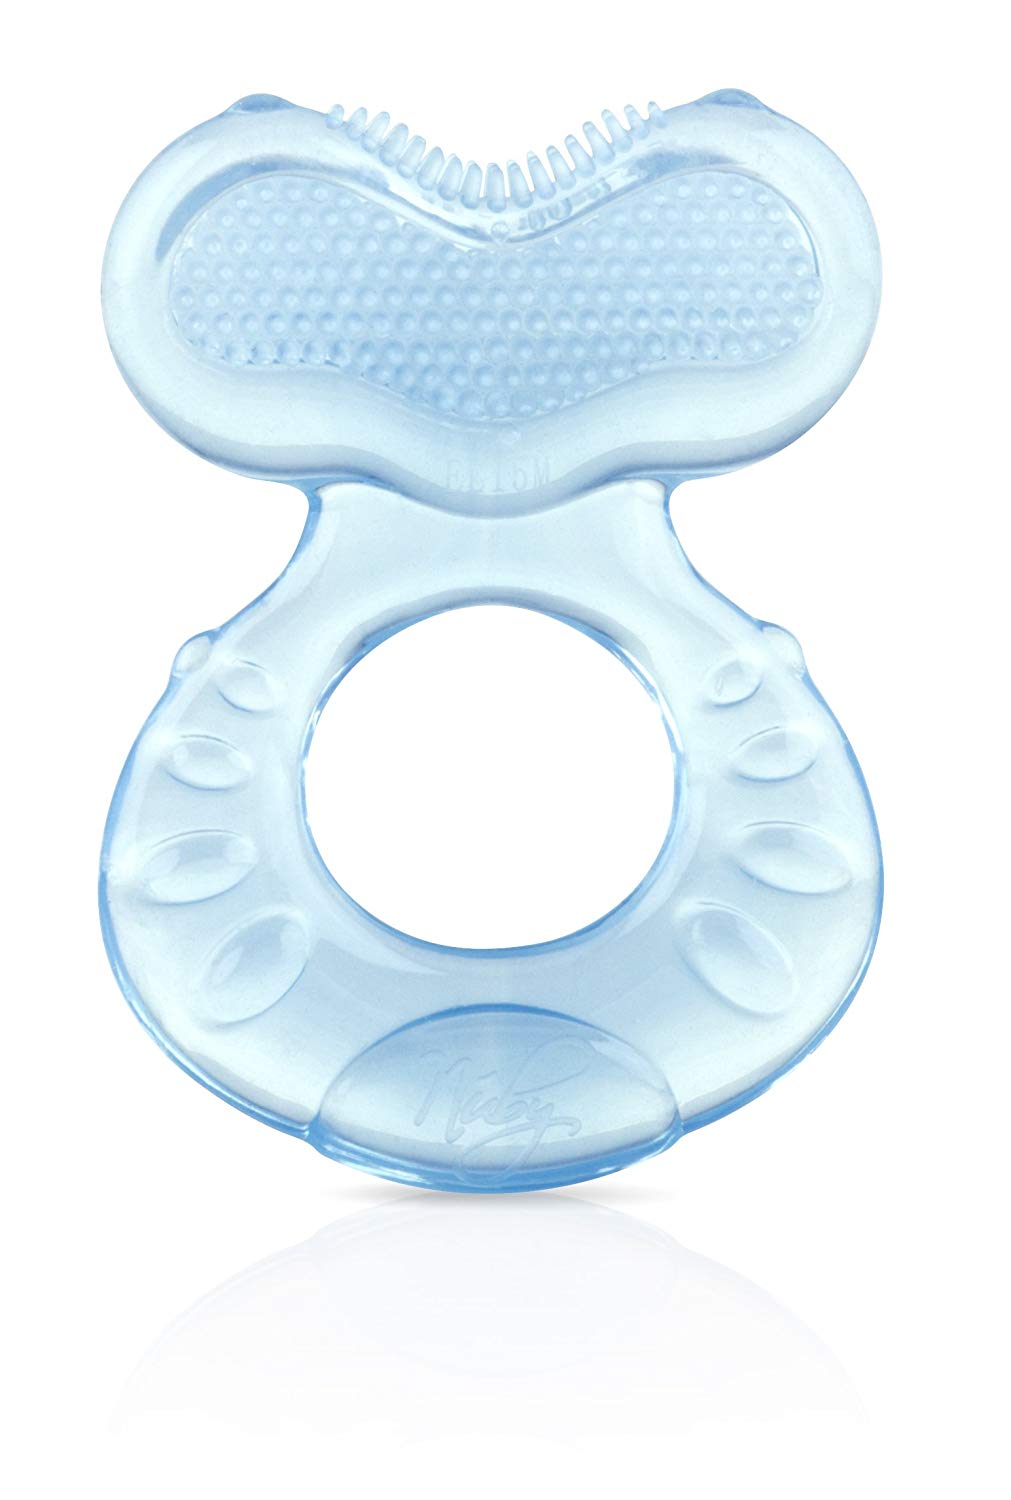 Nuby Bristled Tooth Stimulating BPA Free Teething Toy